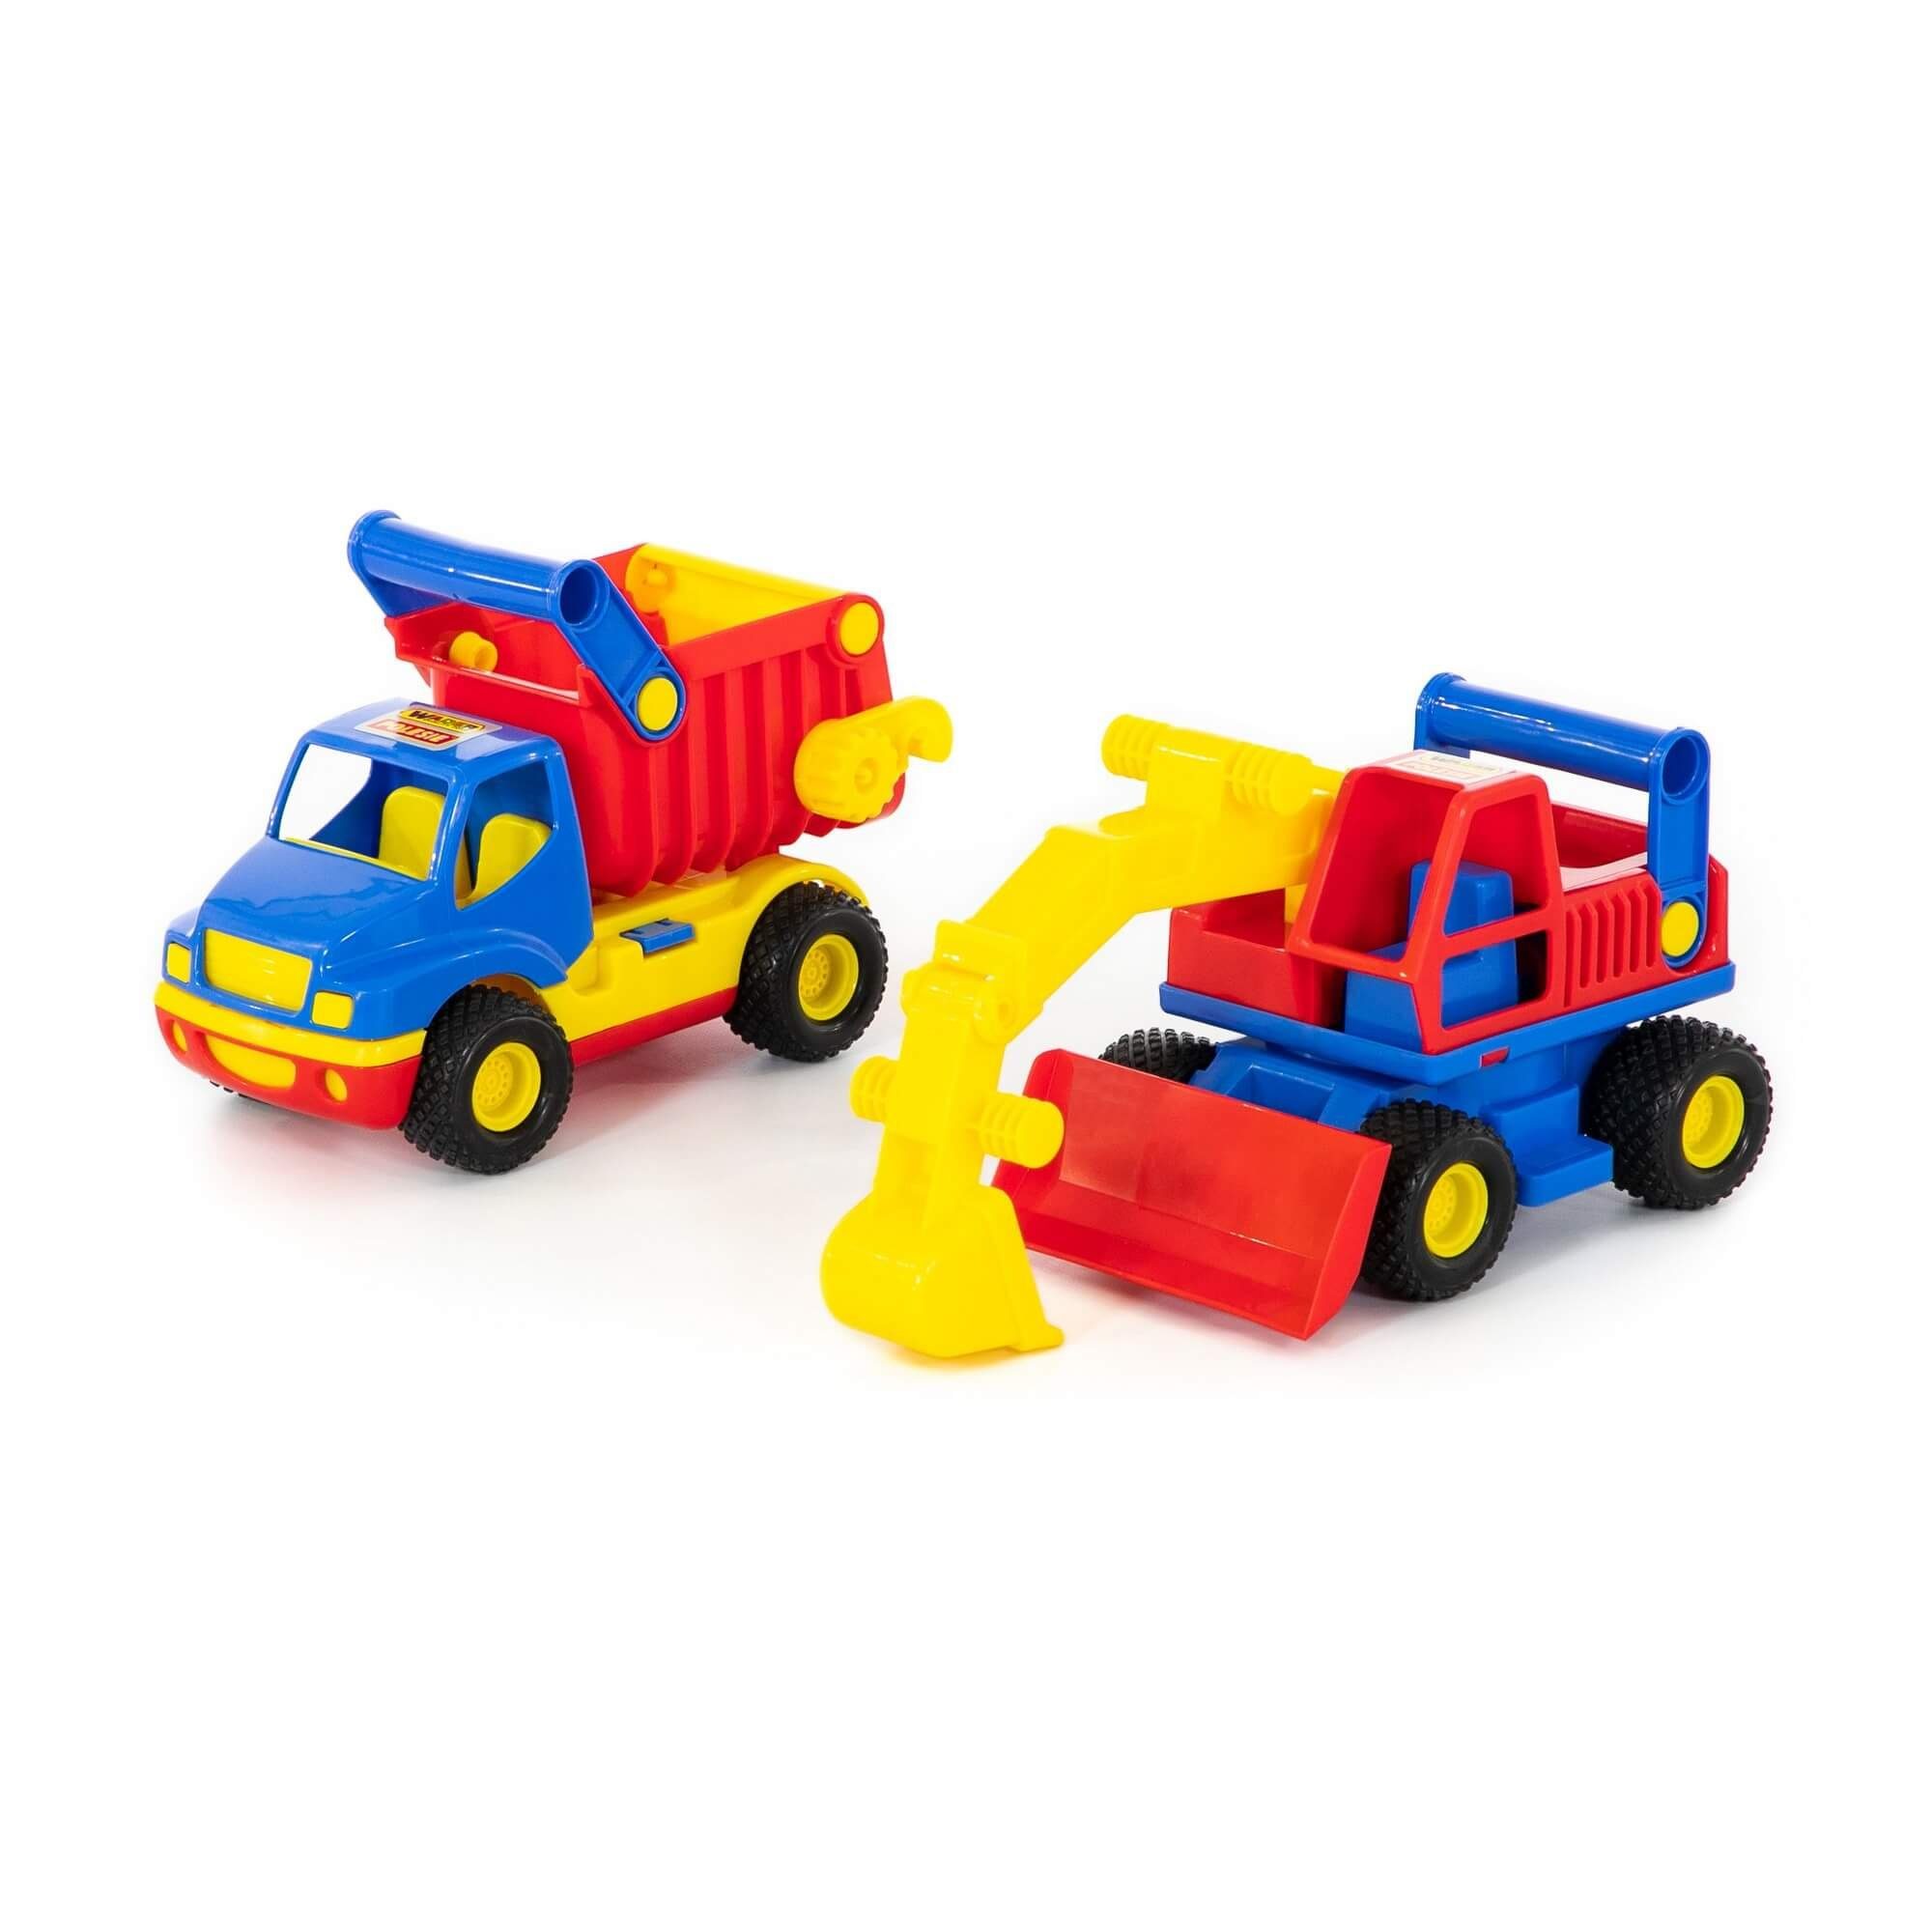 WADER QUALITY TOYS Spielzeug-LKW ConsTruck Kipper+ConsTruck Bagger (im Netz)